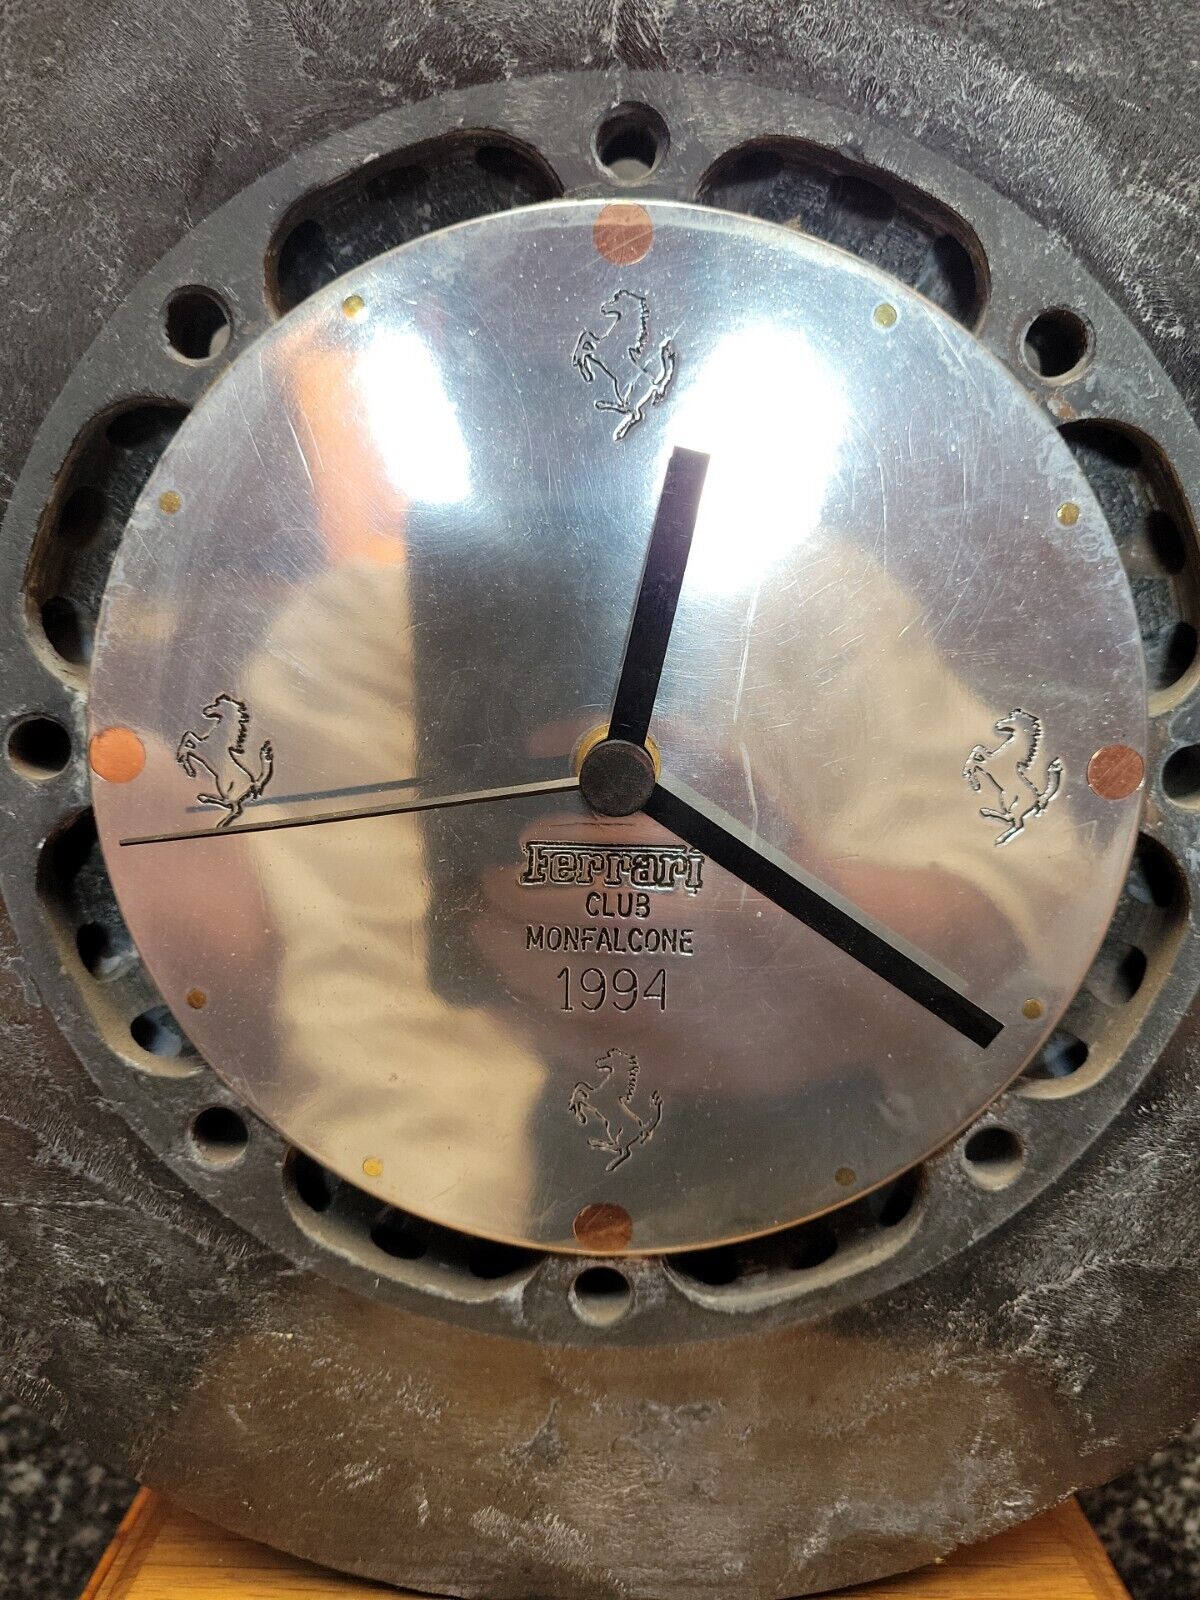 Ferrari Club Trophy Monfalcone Italy 1994 Clock Carbon Ceramic Brake Rotor